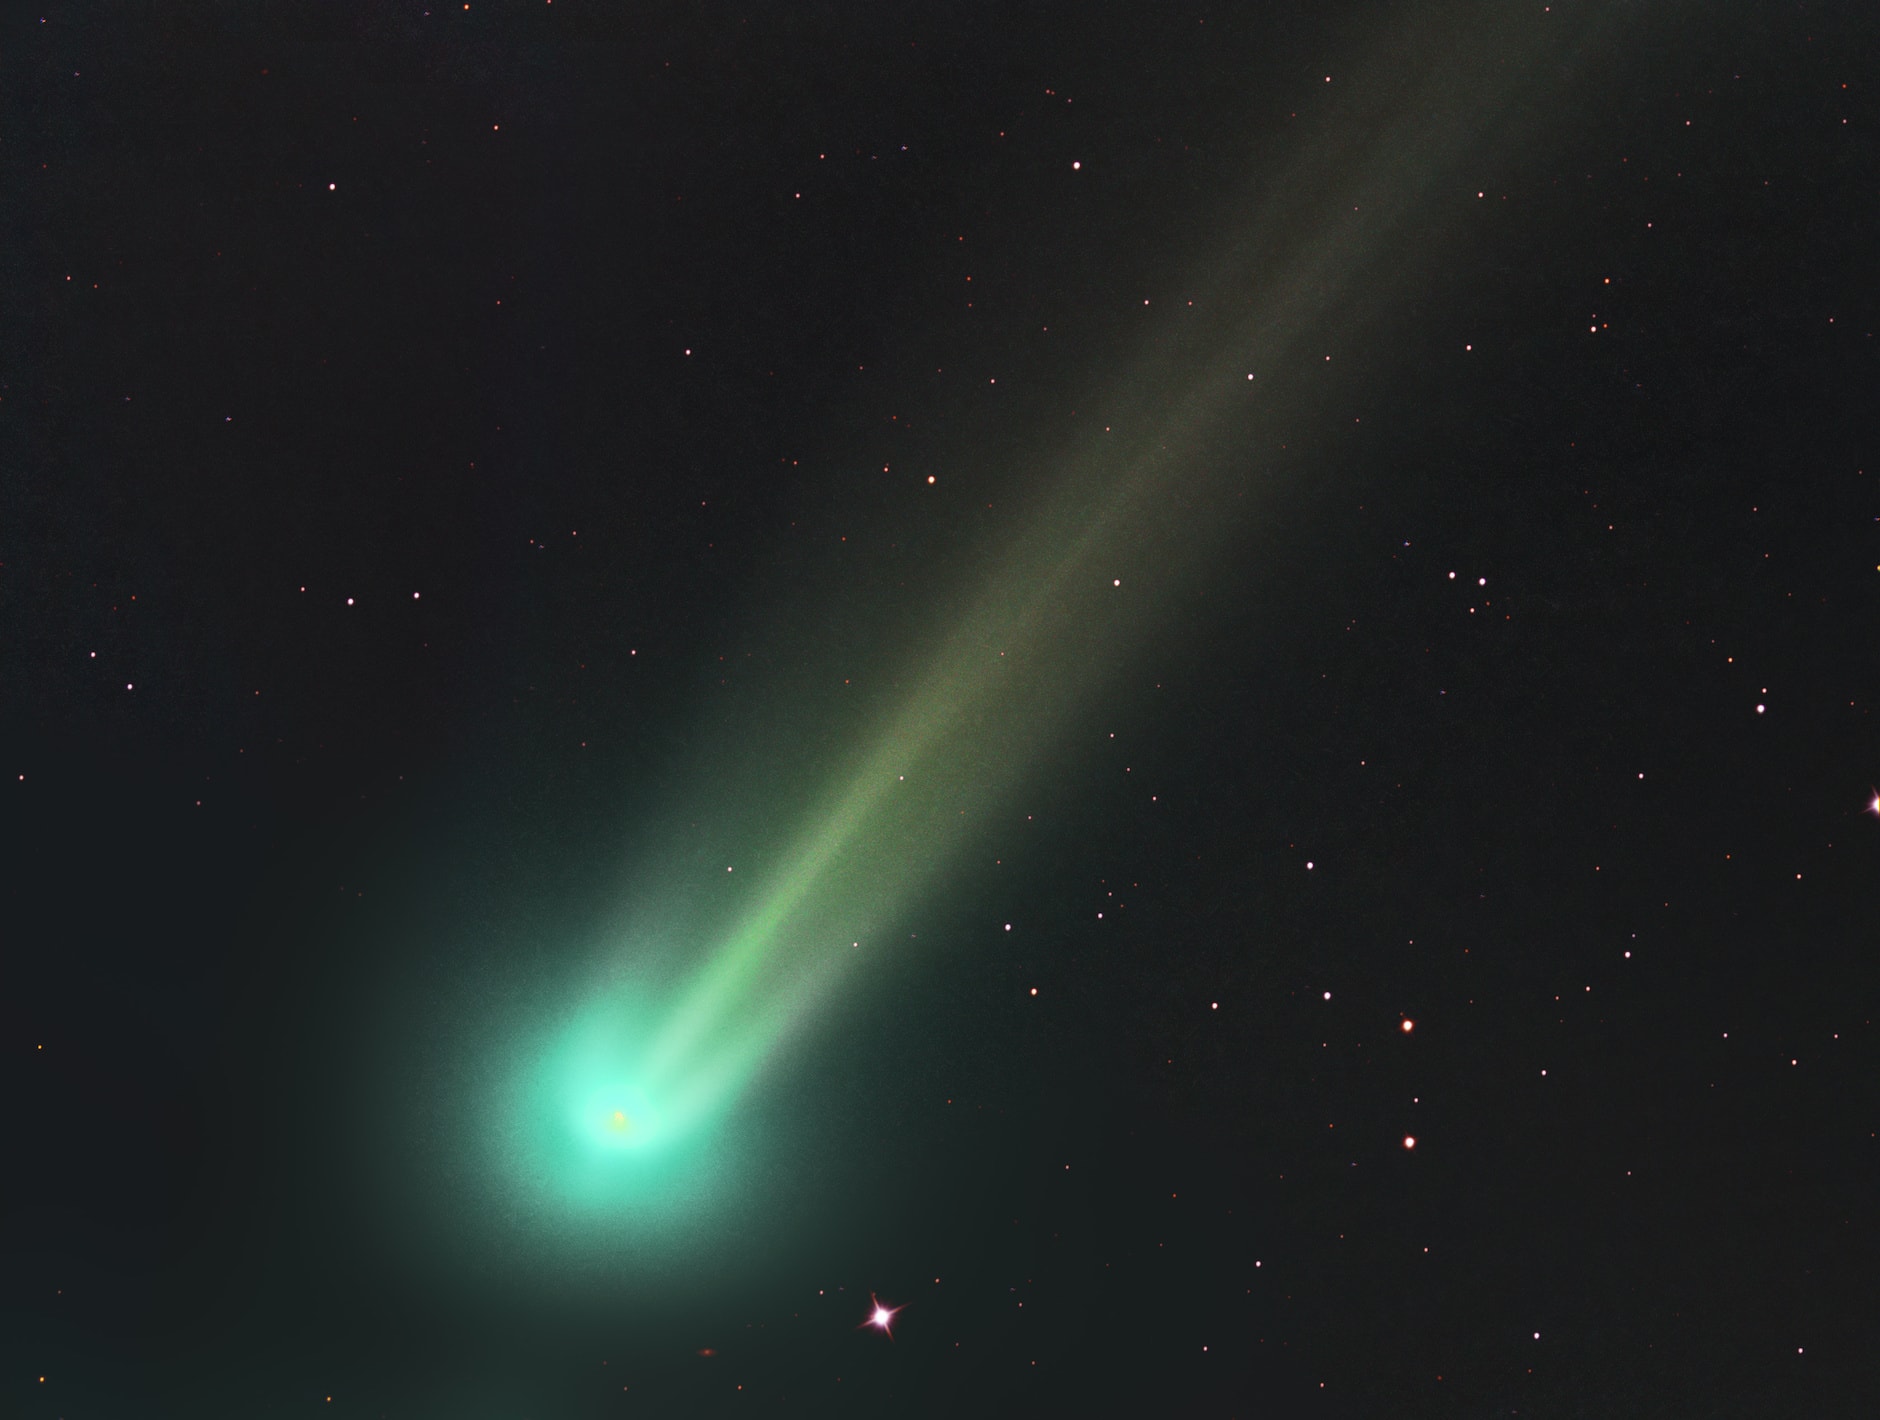 Comet lovejoy streaking through the night sky